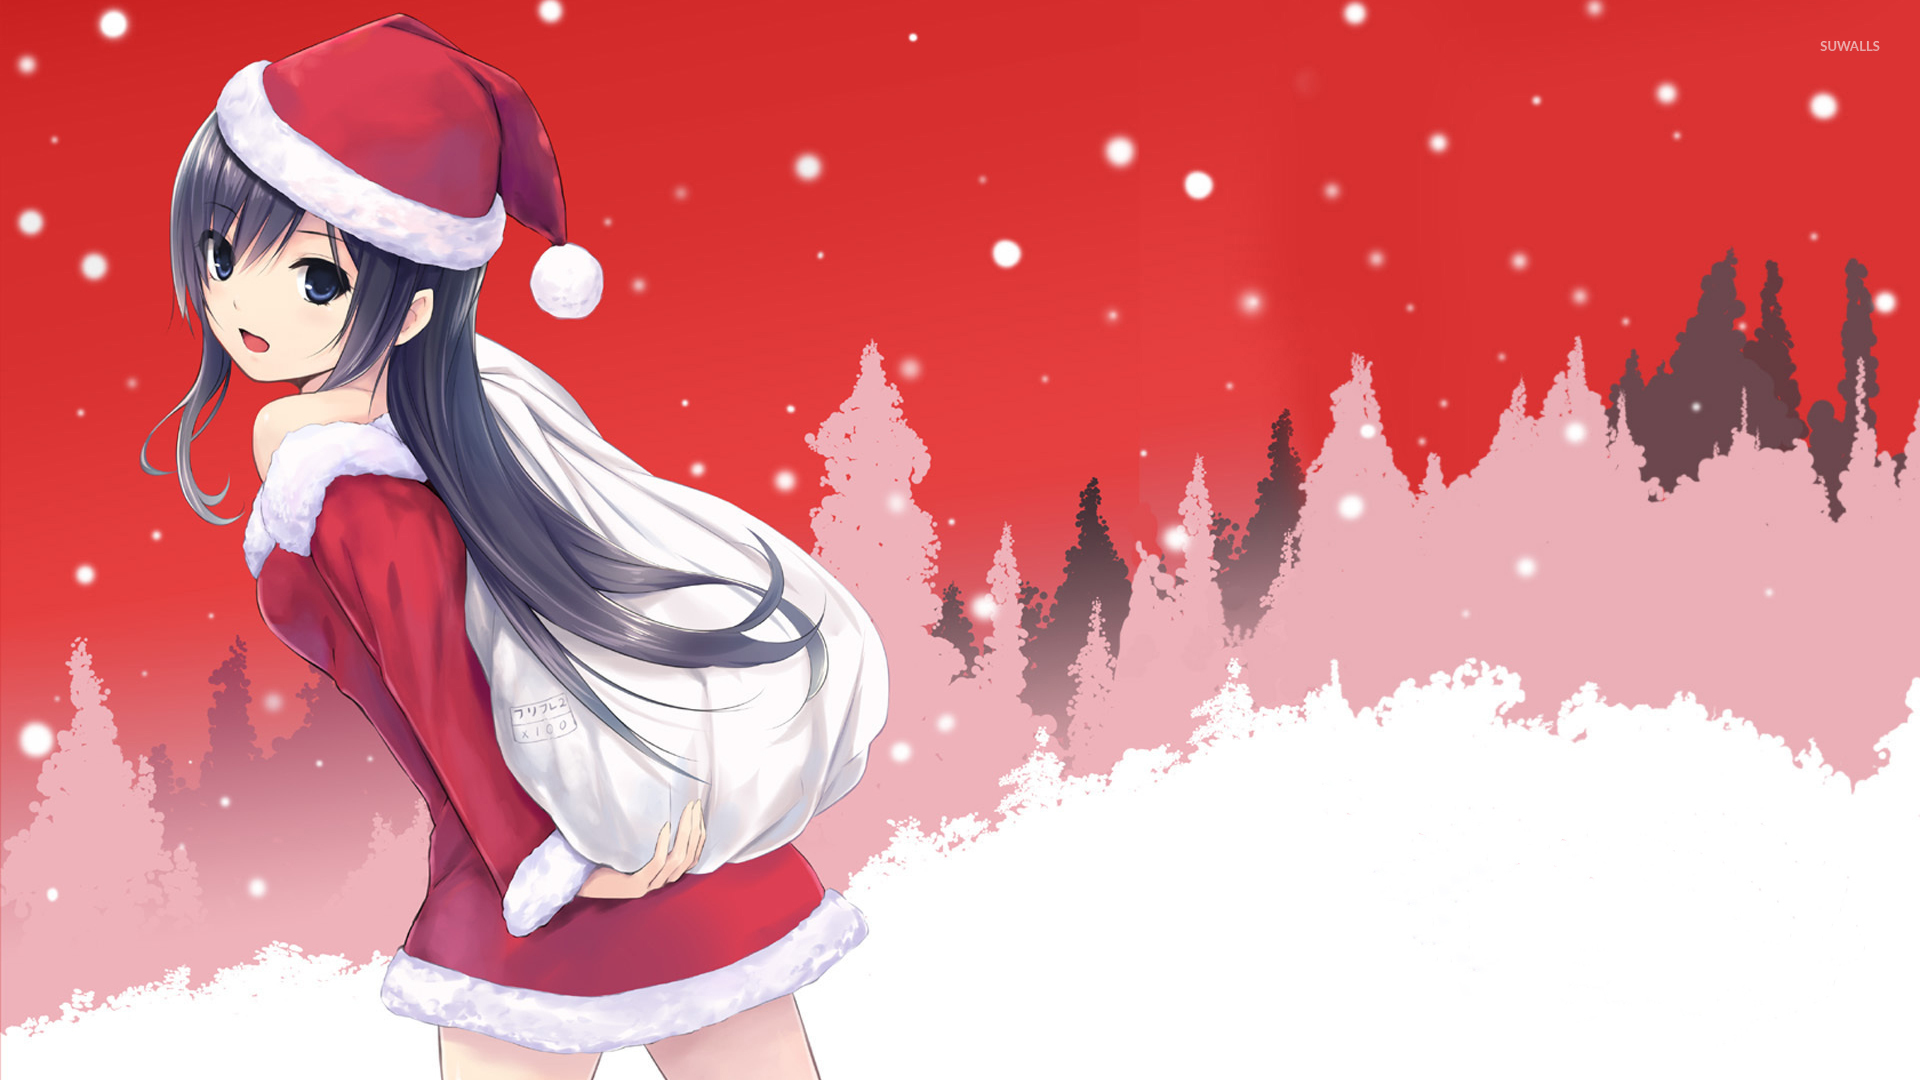 Sumire Shinozaki with Santa's hat - Free Frinds 2 wallpaper - Anime ...